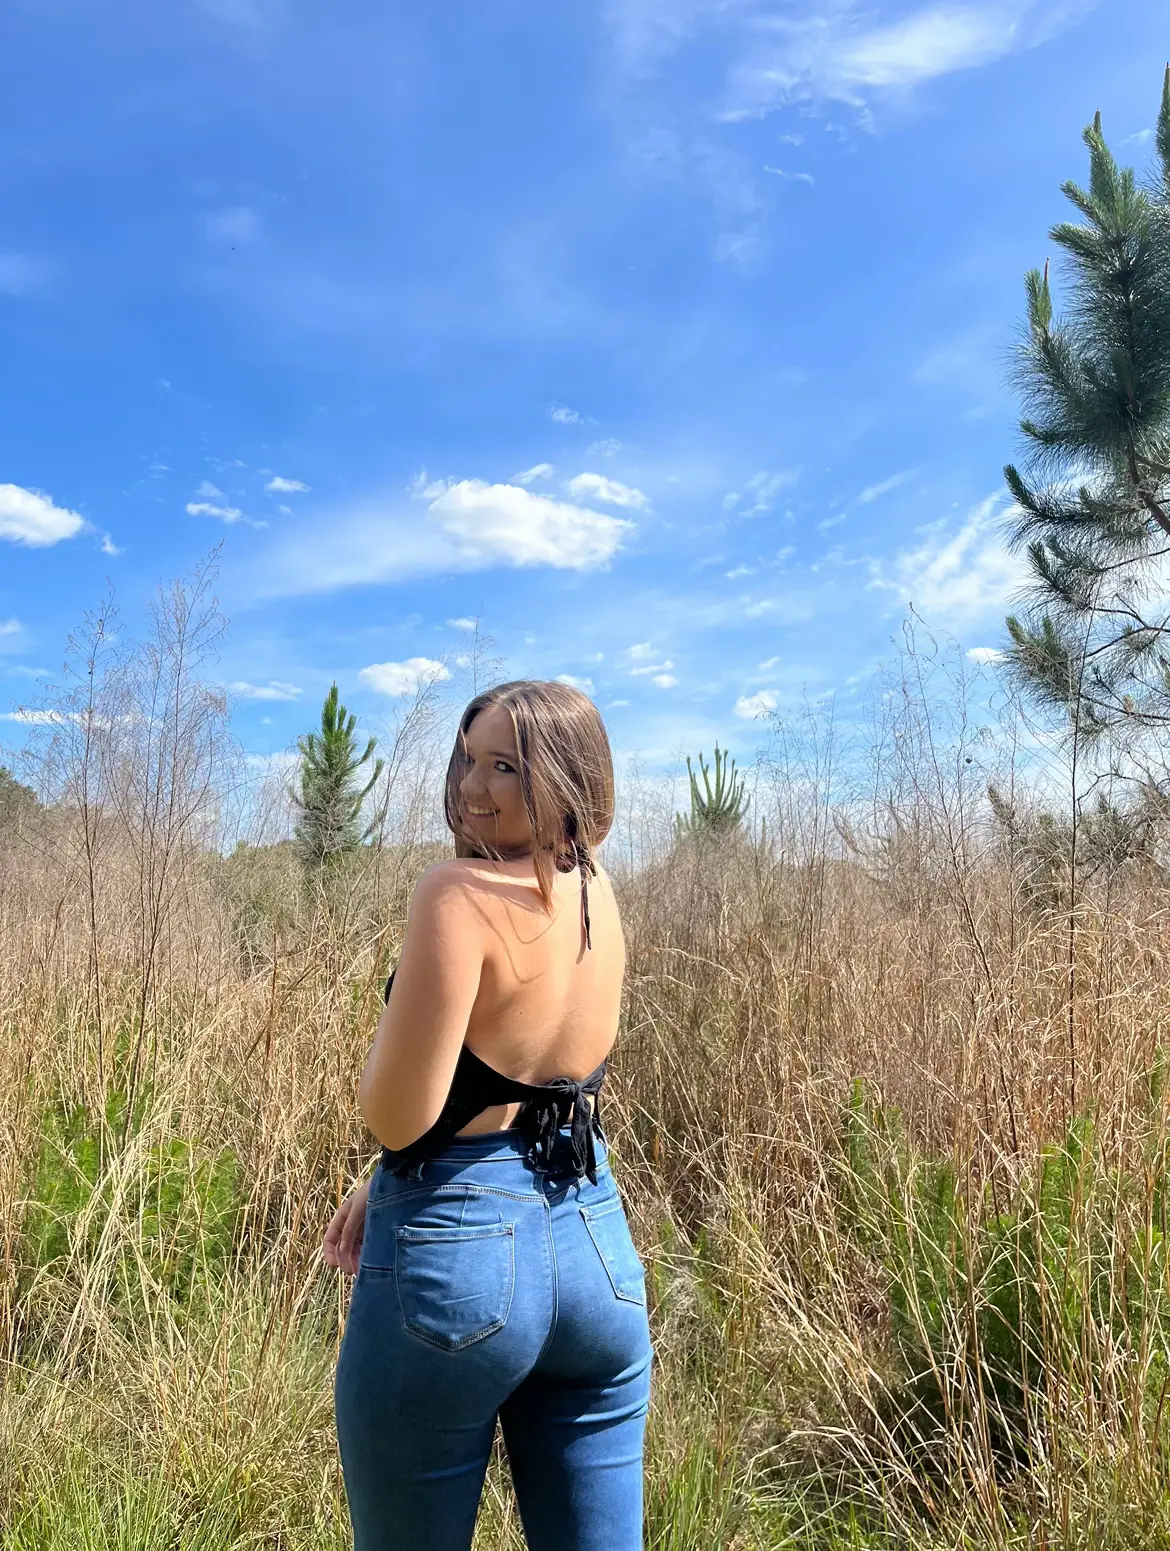 Mossy Oak Camo Lace Boy Short Panties - American Outdoor Woman